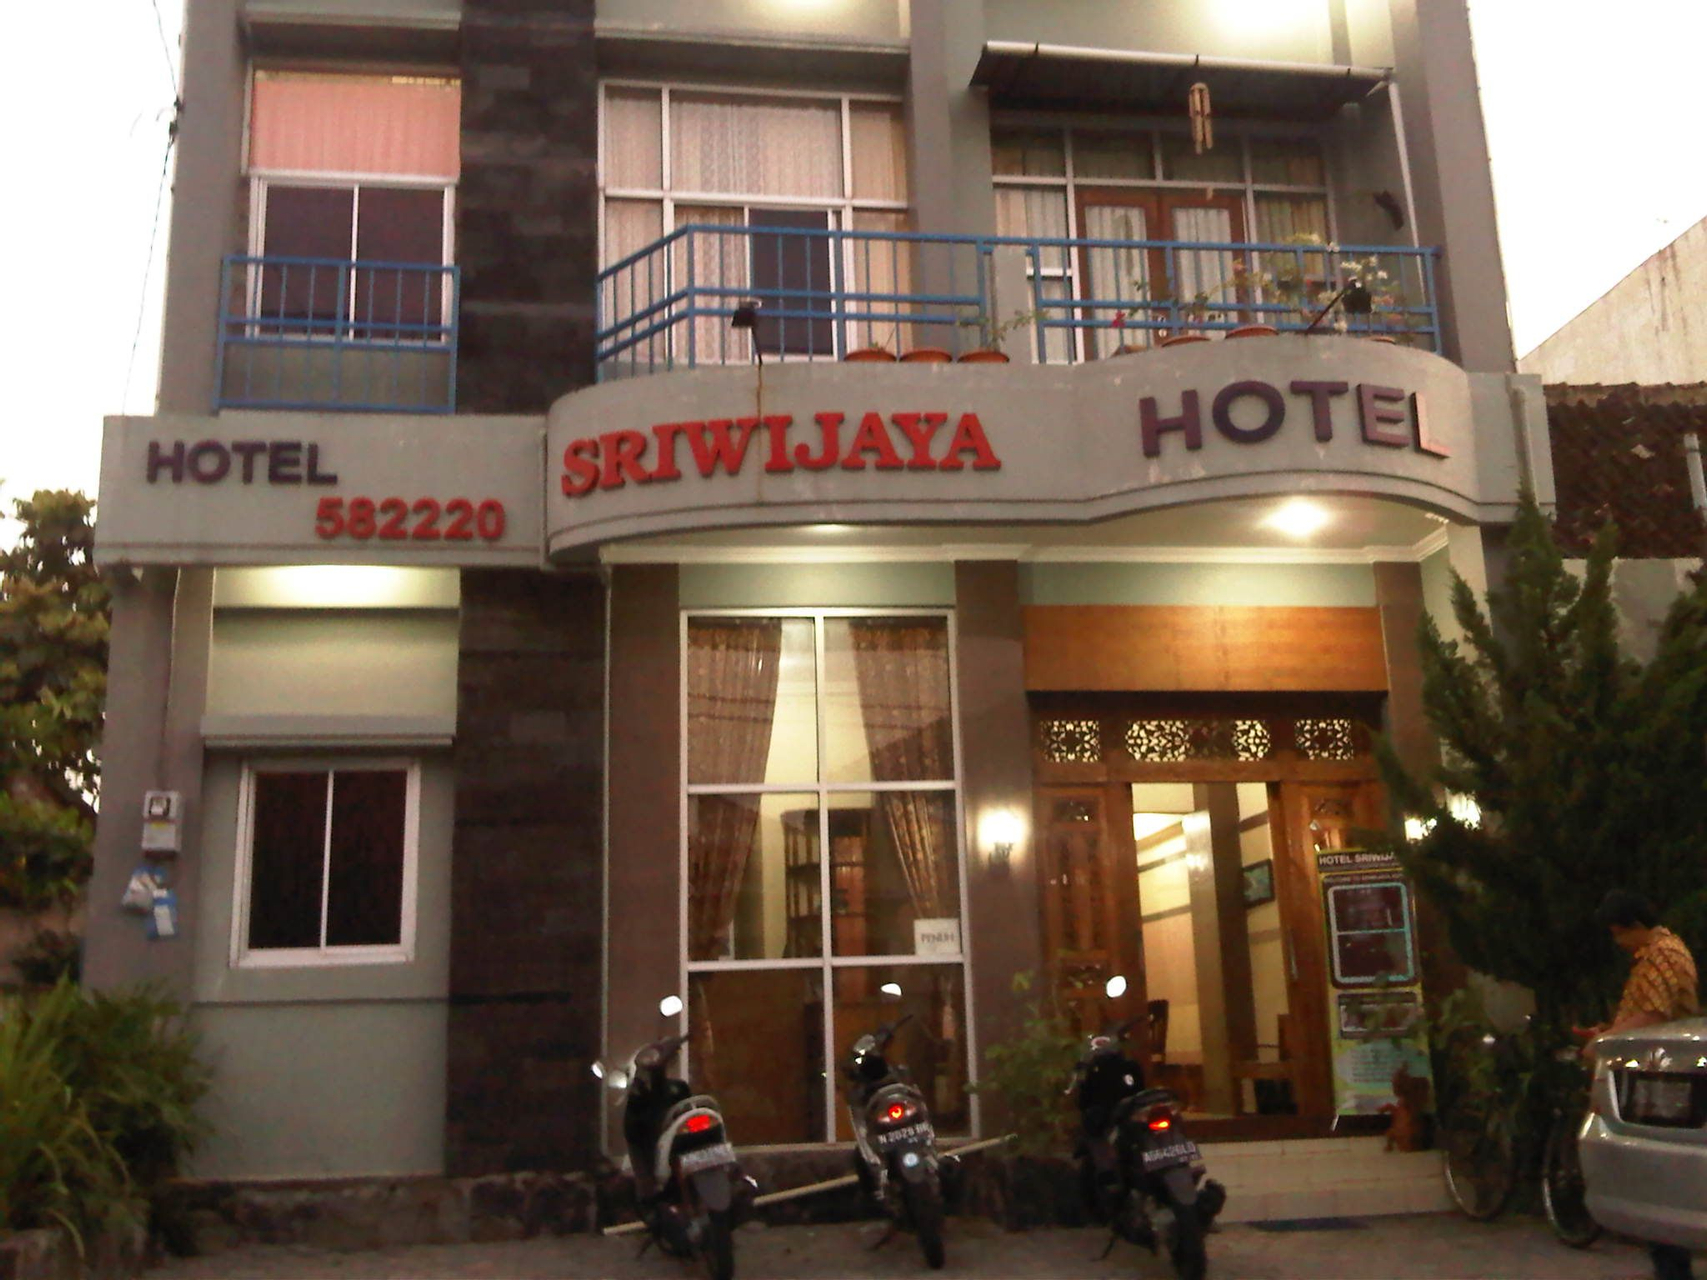 Sriwijaya budget hotel near Malioboro 1, Yogyakarta